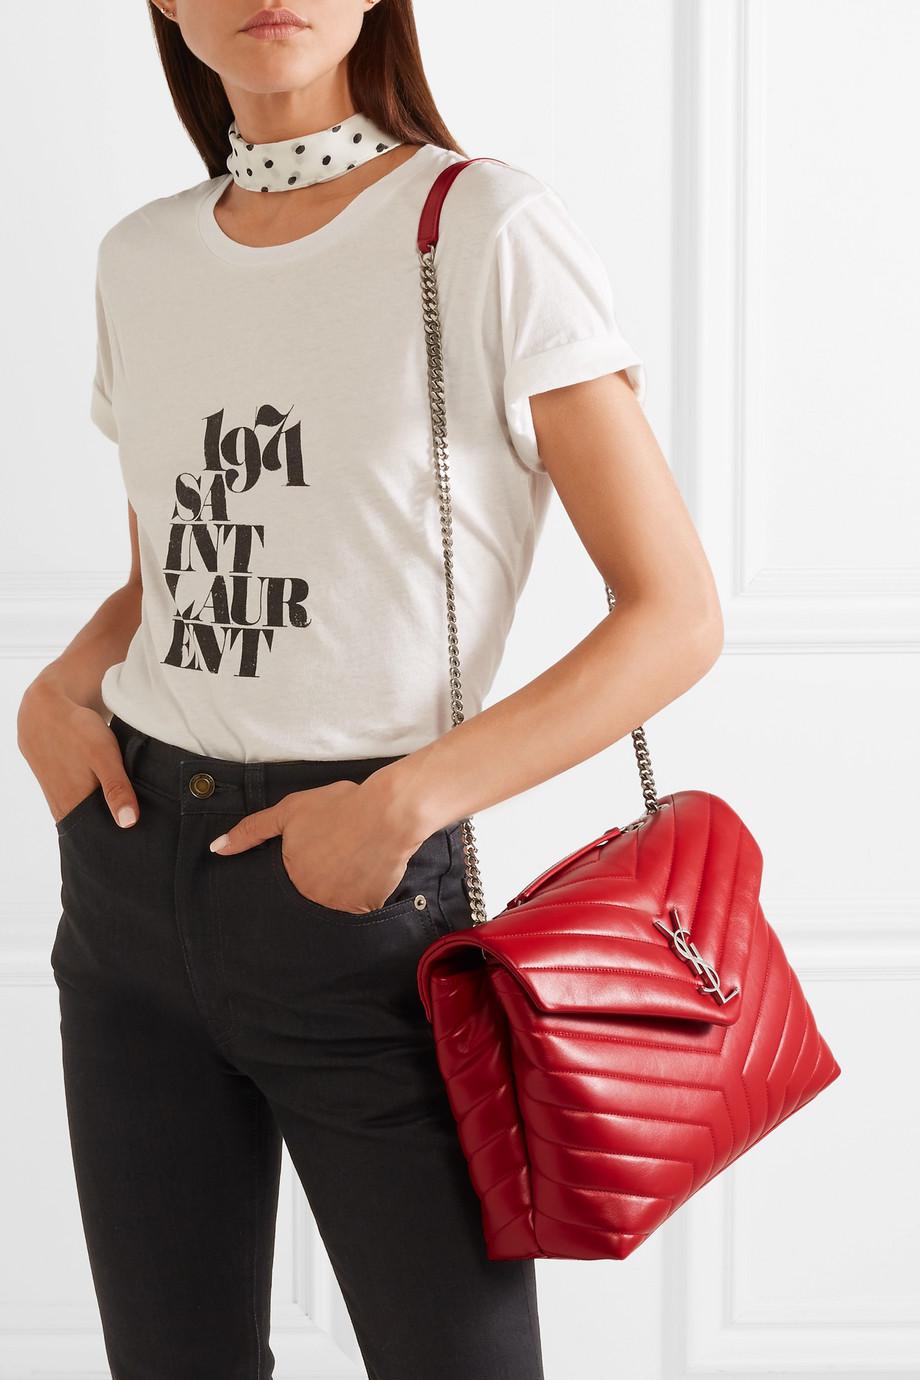 Saint Laurent Medium Loulou Monogram Chain Bag In Lipstick Red y  Matelassé Leather